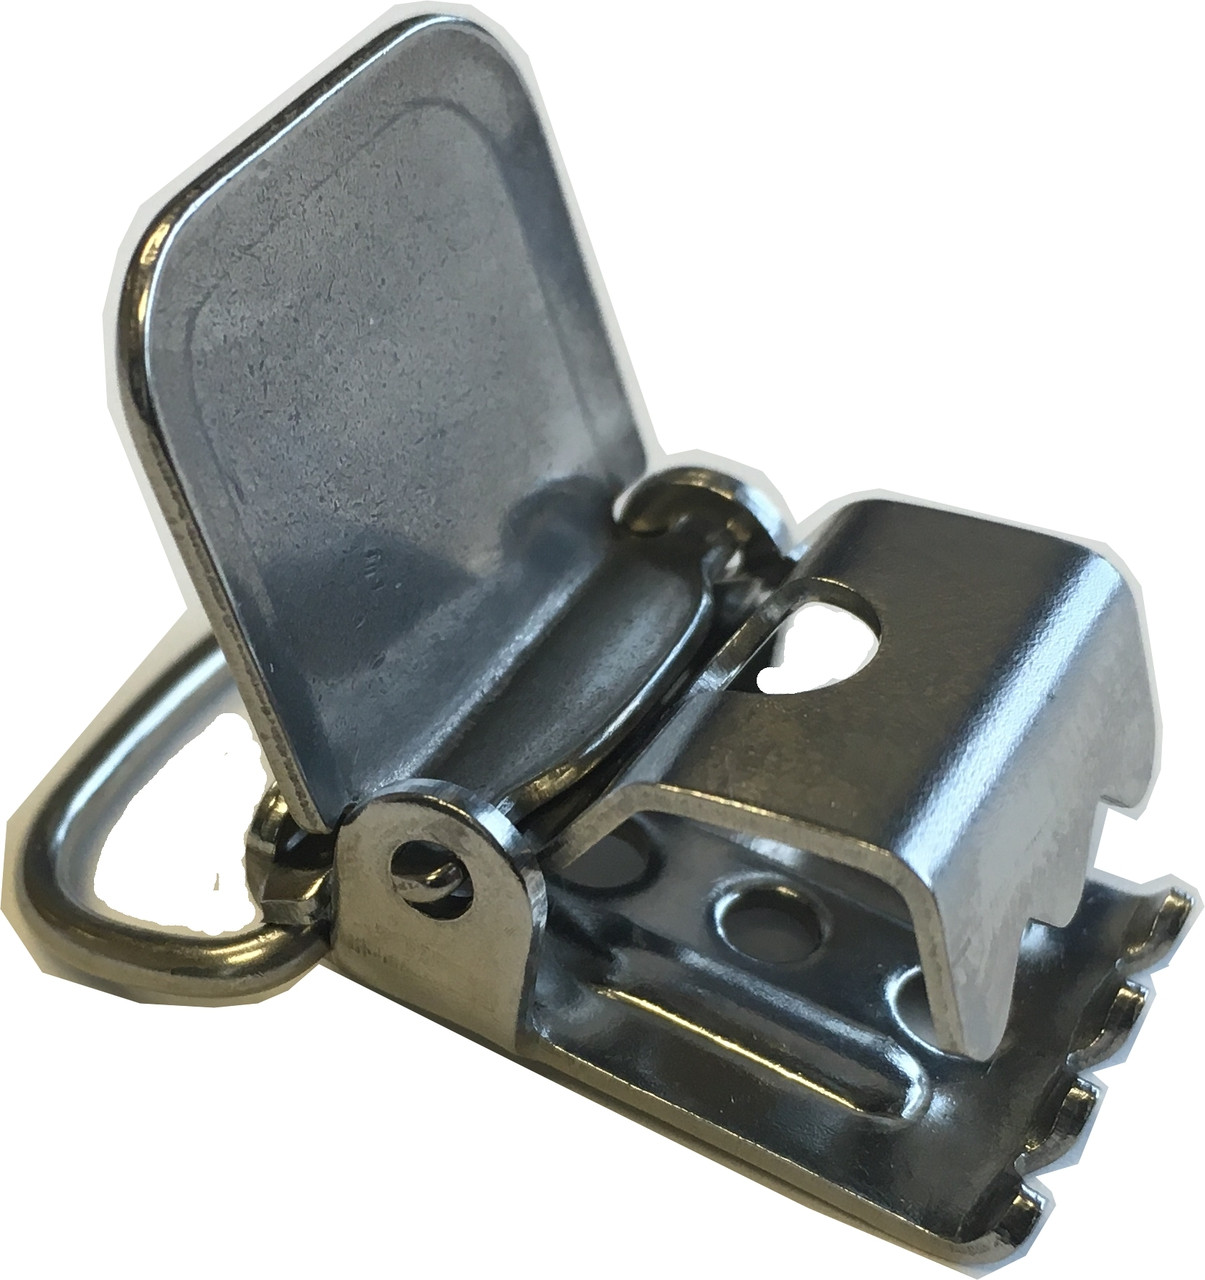 Replacement Suspender Clip for Ventis MX4 & GasBadge Series Monitors | Mfg#  17120528